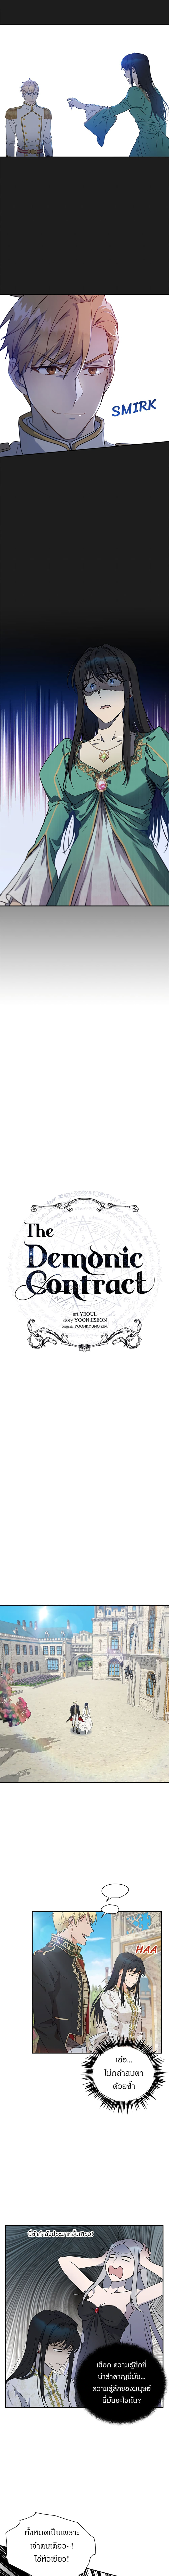 The Demonic Contract 34 04